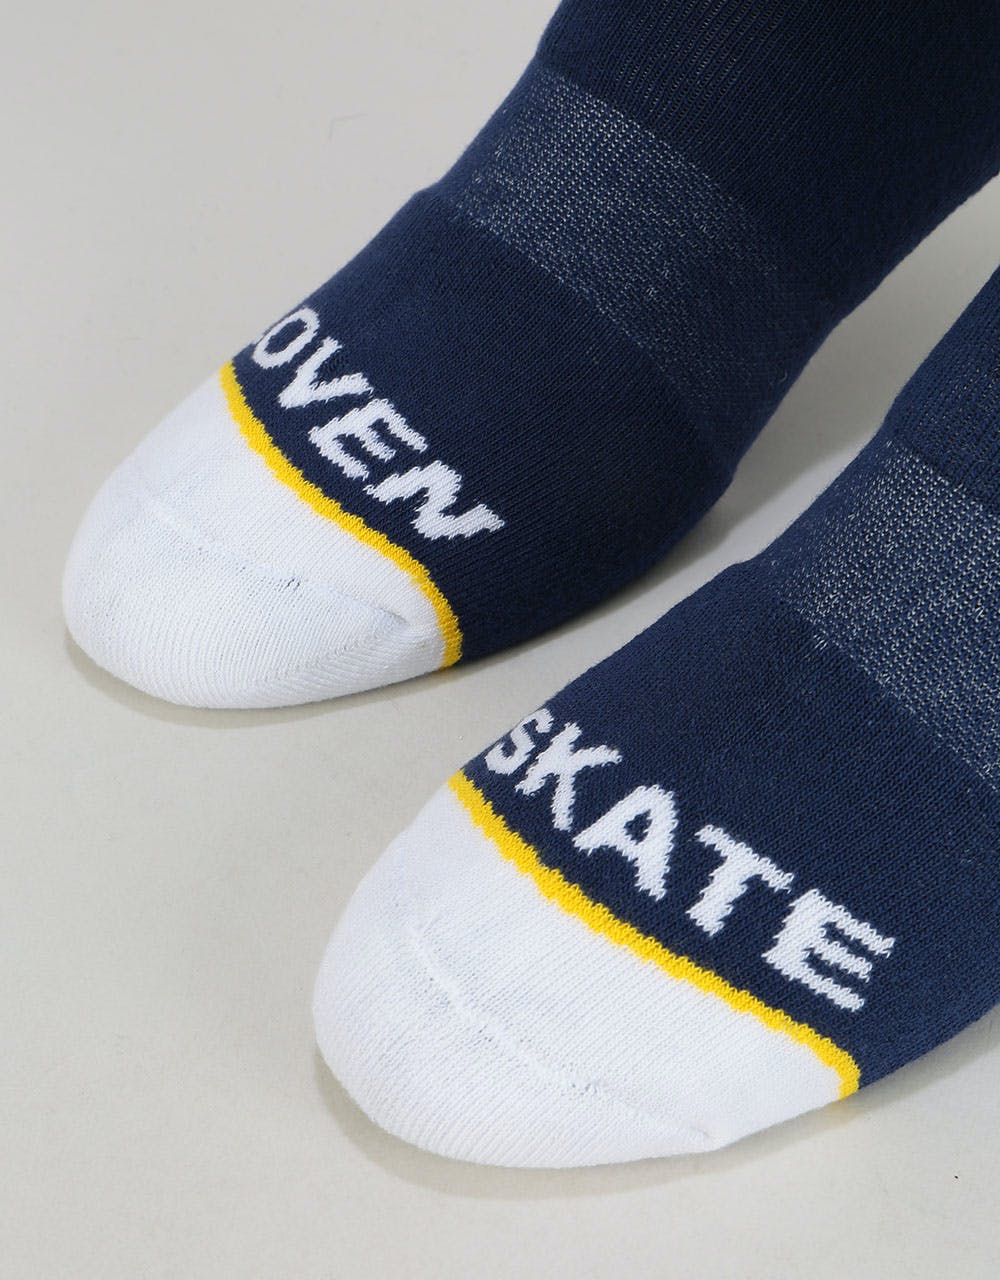 Lovenskate x Apart Together Socks - White/Navy/Yellow